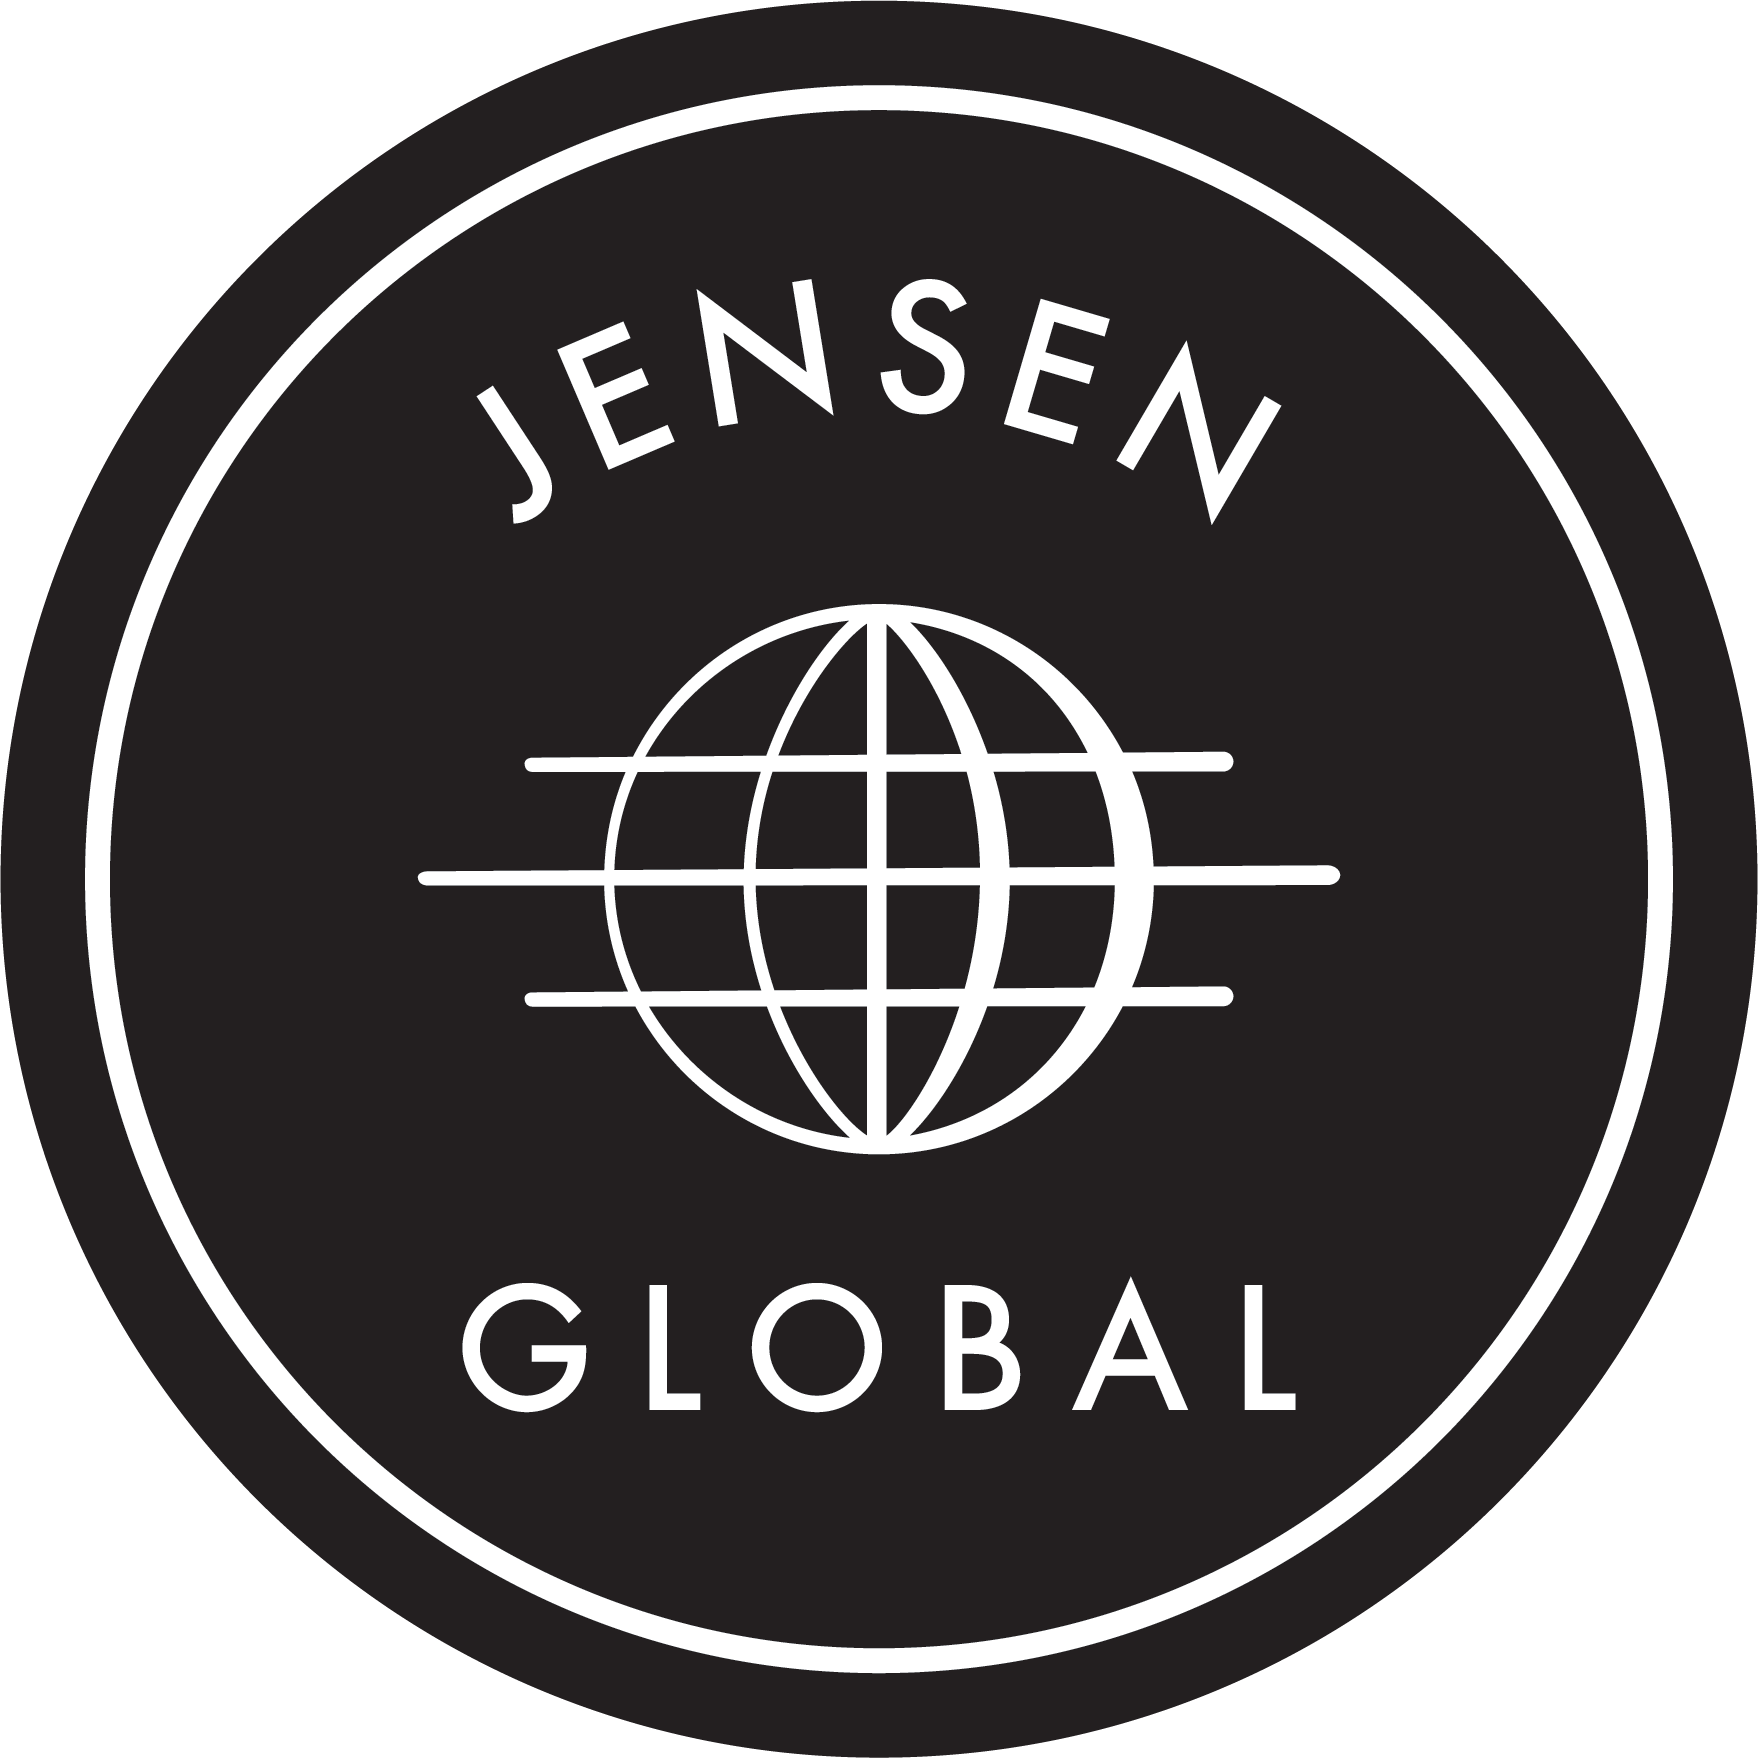 Jensen Global Inc. LOGO